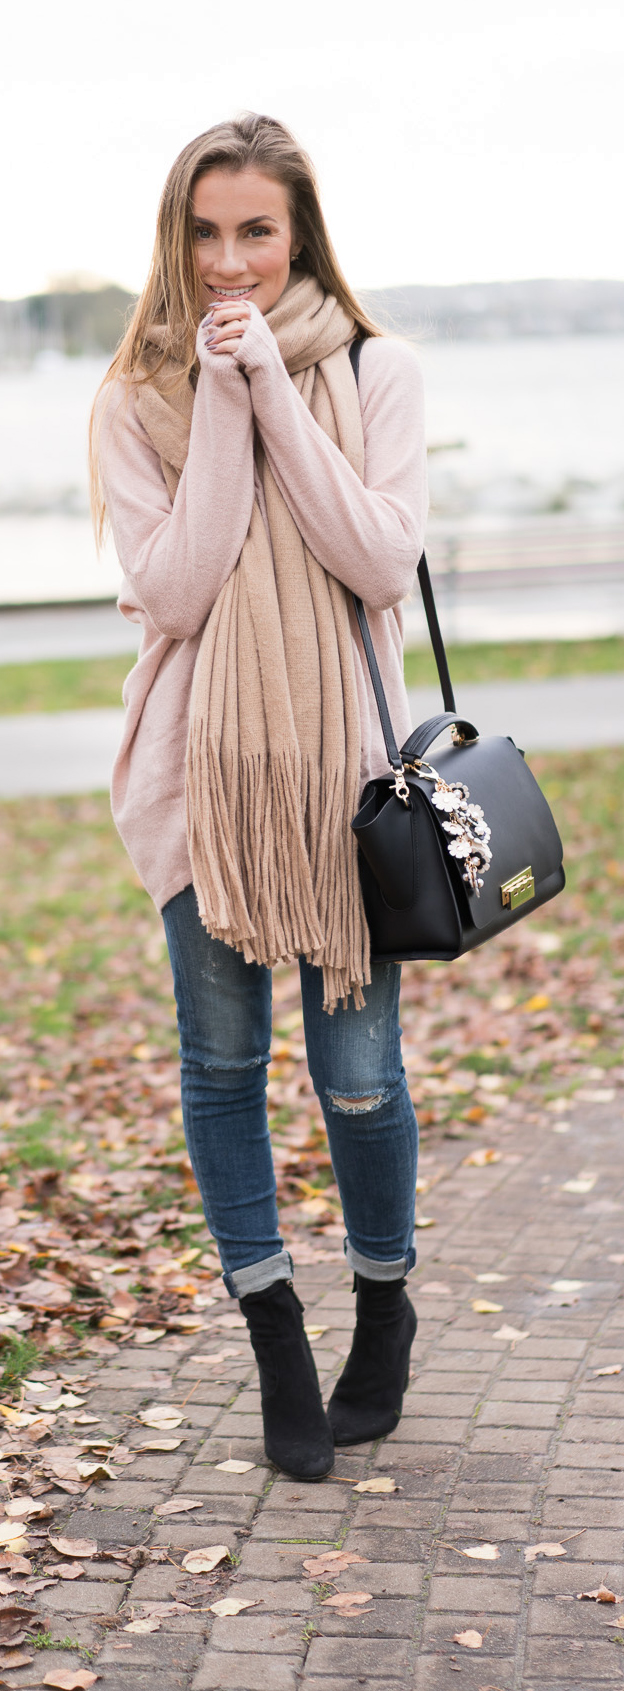 Fall Outfit: Blush Sweater - Legging Ankle Jeans - Scarf - Booties - Zac Zac Posen Handbag - Spring Earthette Floral Charm. Angela Lanter - Hello Gorgeous.